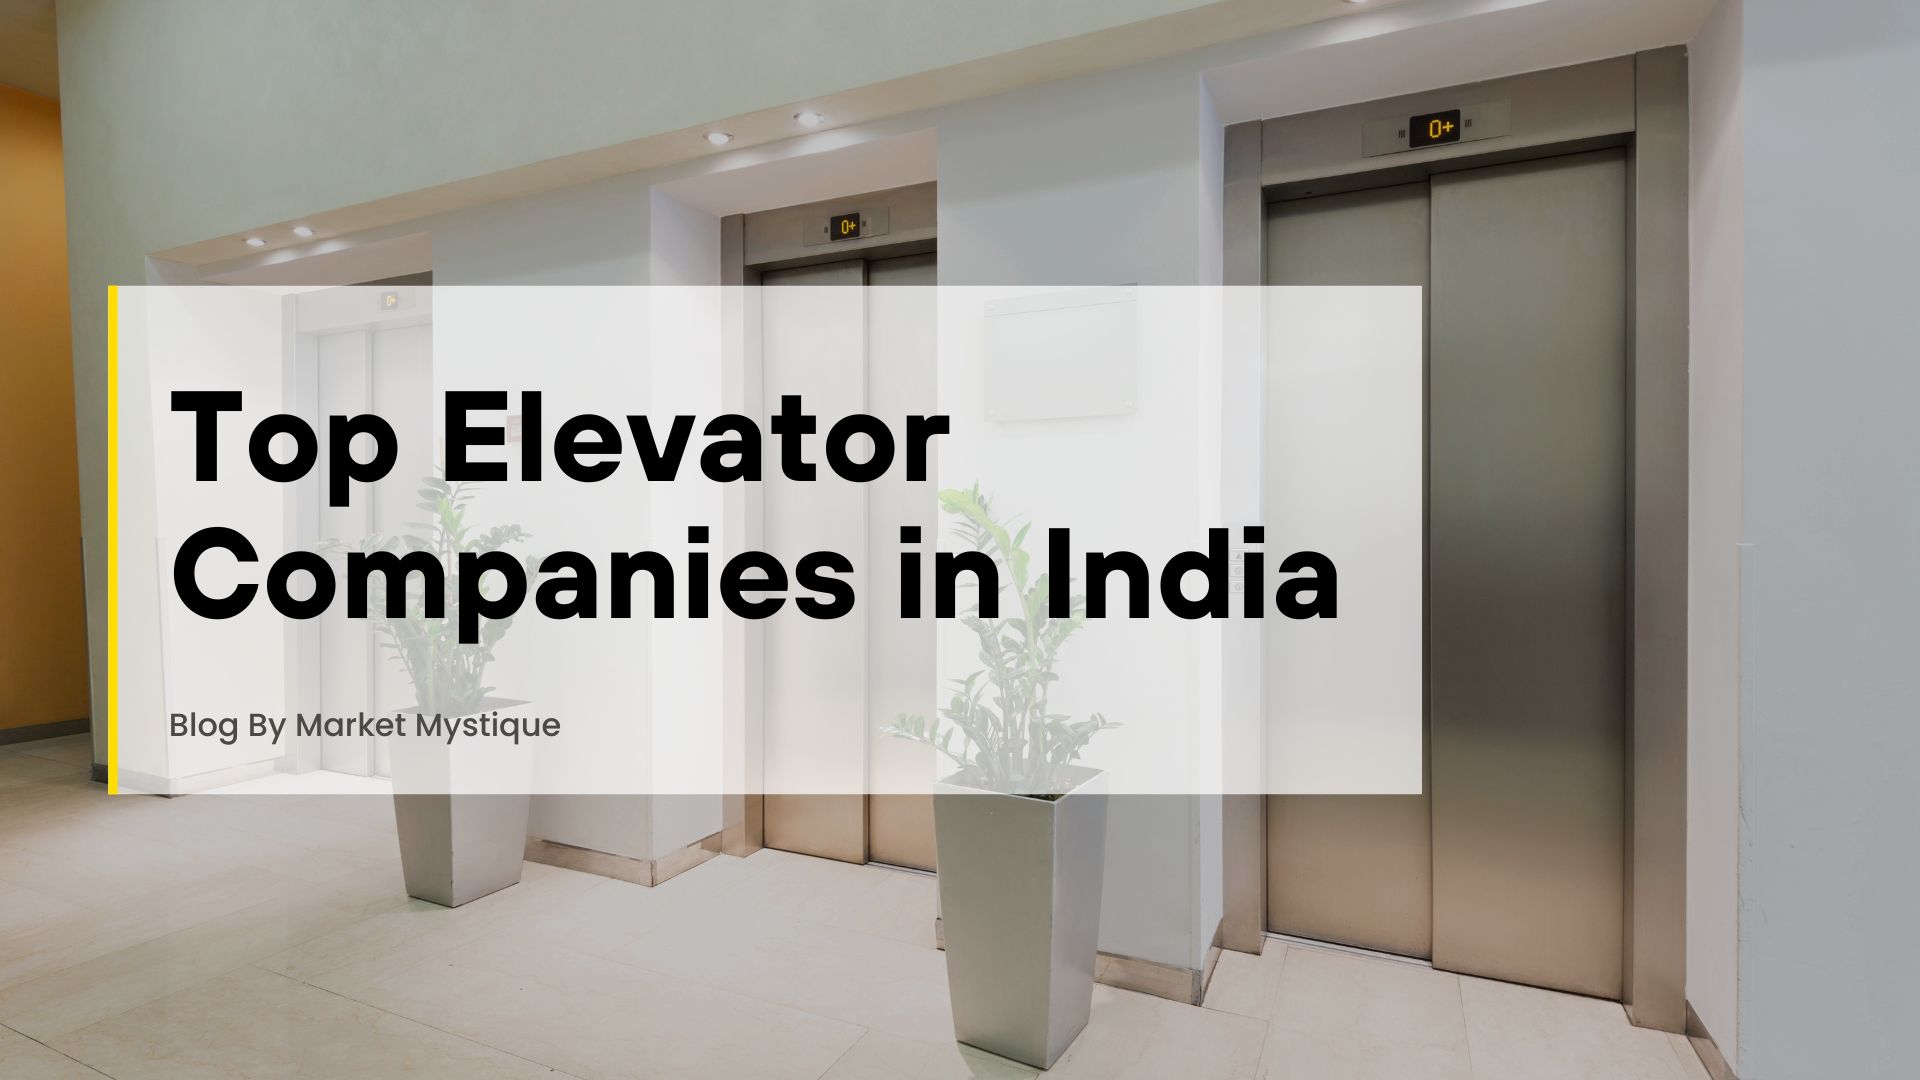 Top 10 Elevator Companies in India